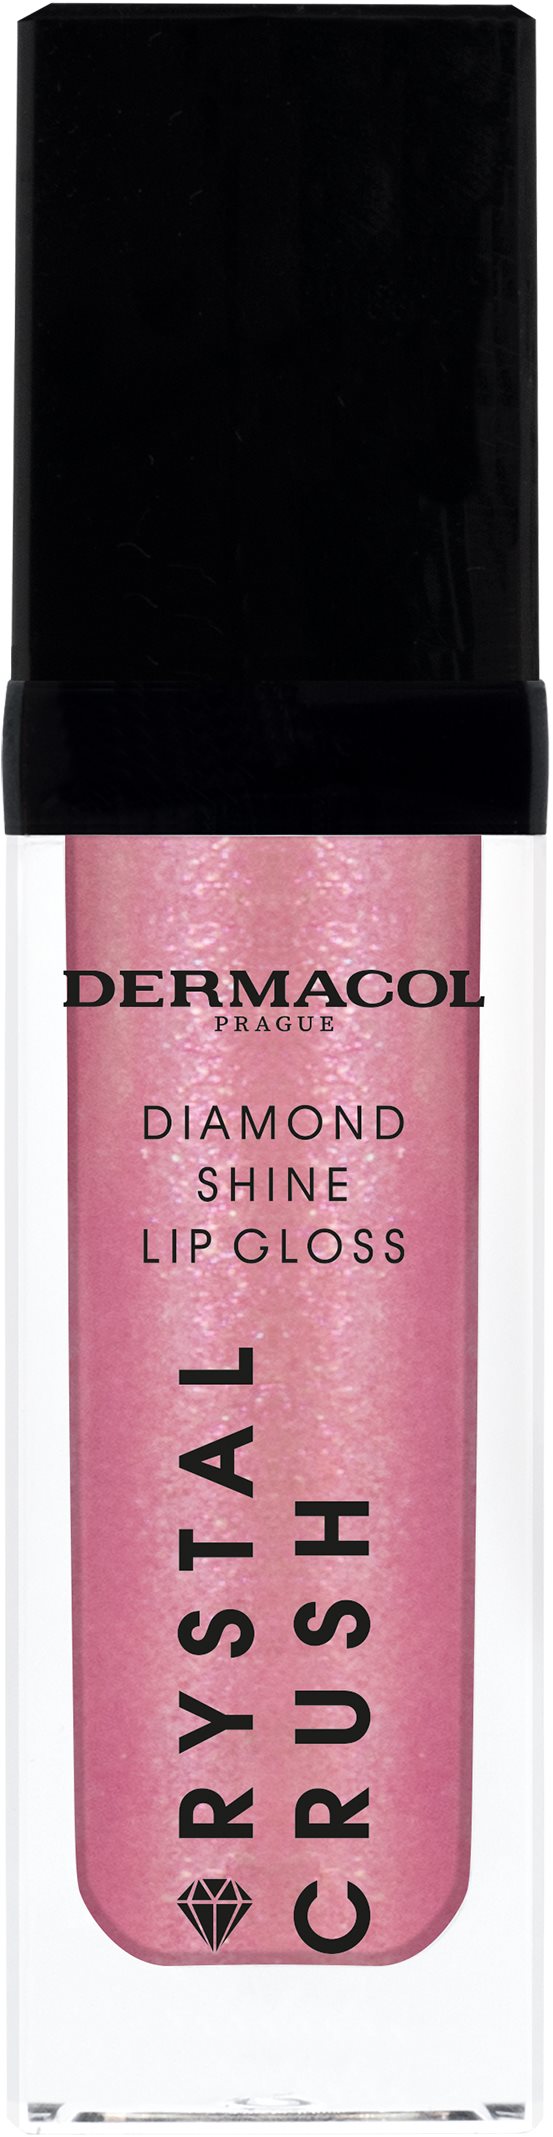 DERMACOL Crystal Crush Diamond Shine Lip Gloss No.01